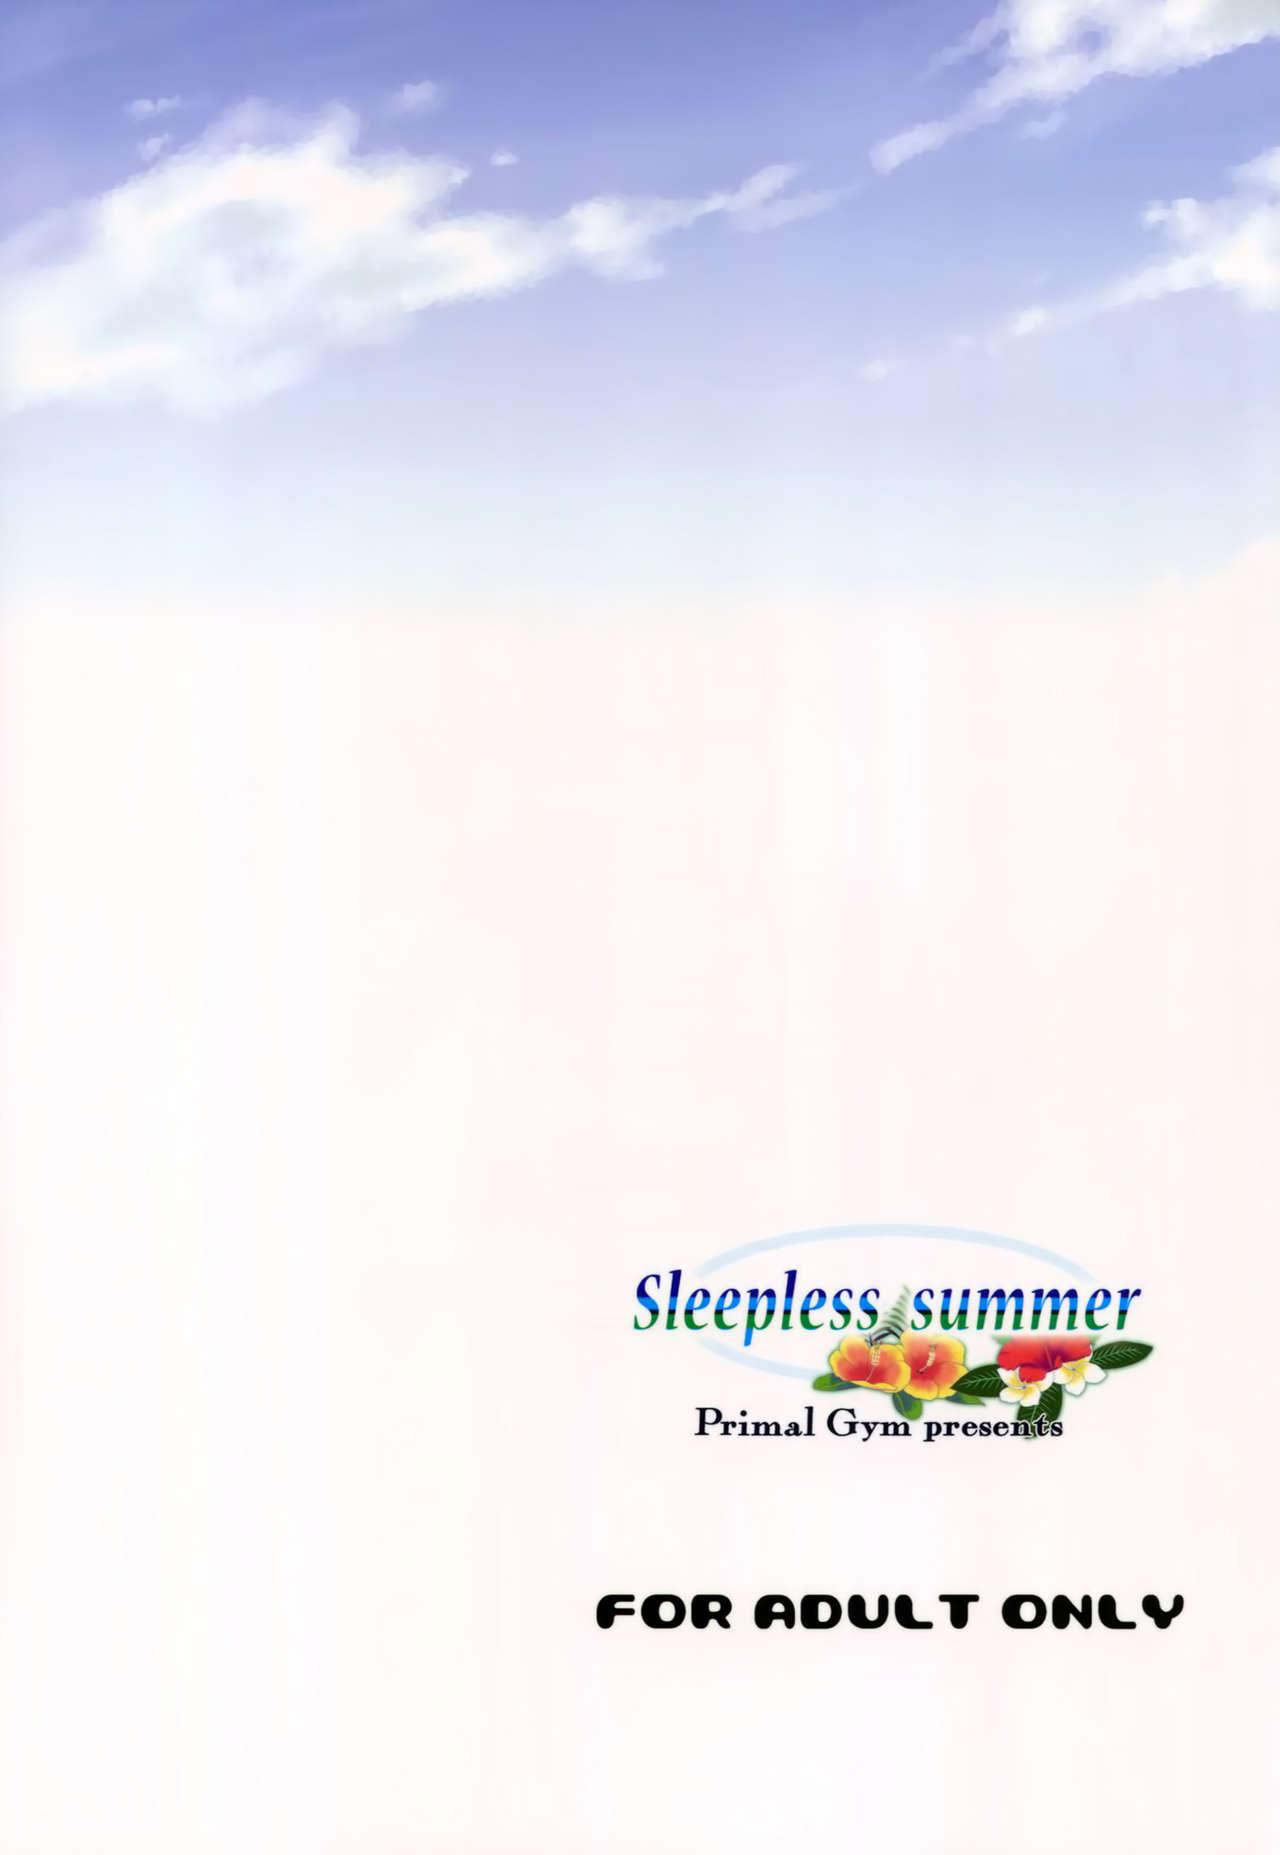 Sleepless summer 22